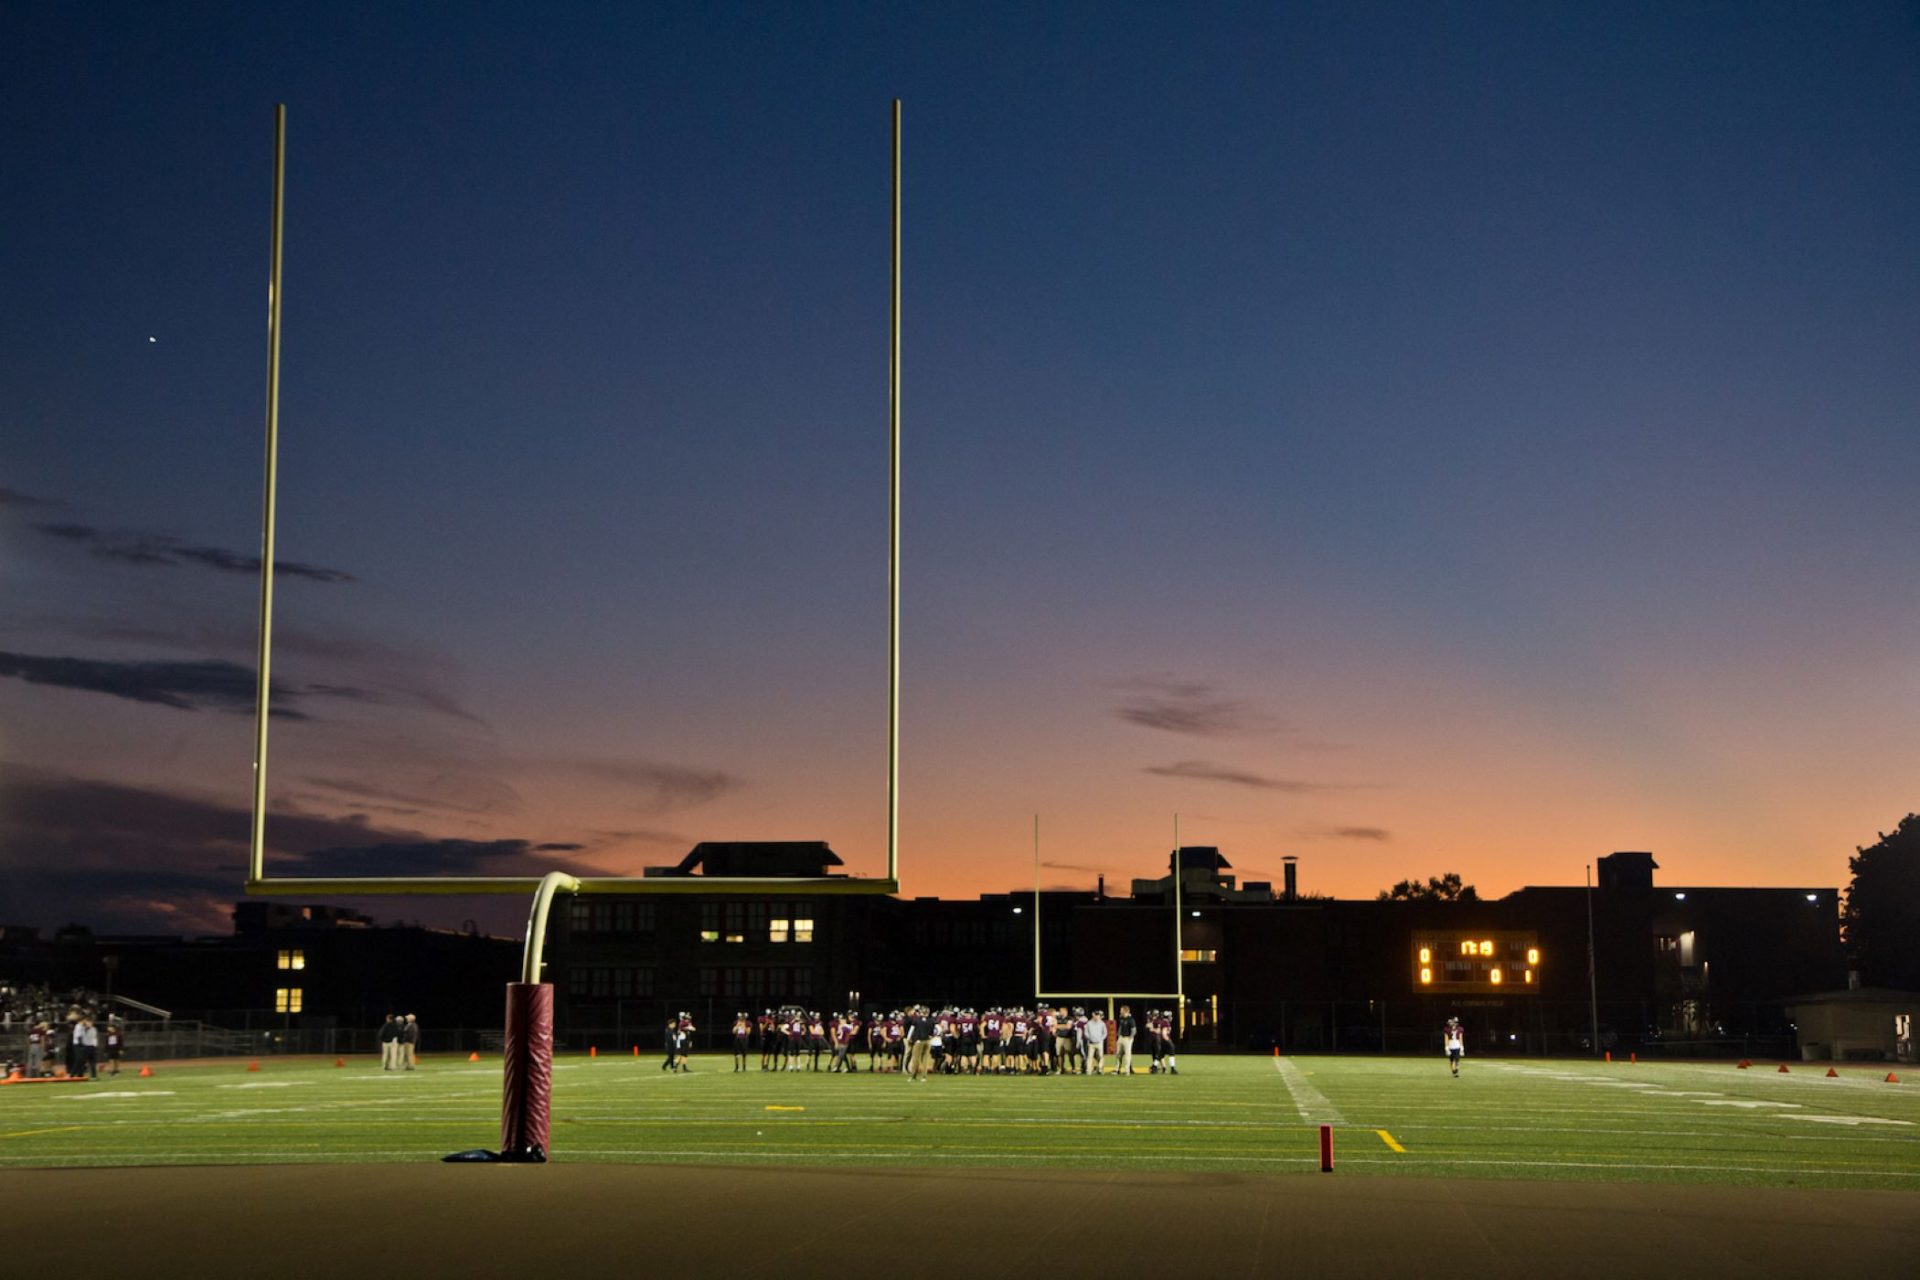 The Radnor High School football team played Haverford High School on October 22, 2021.